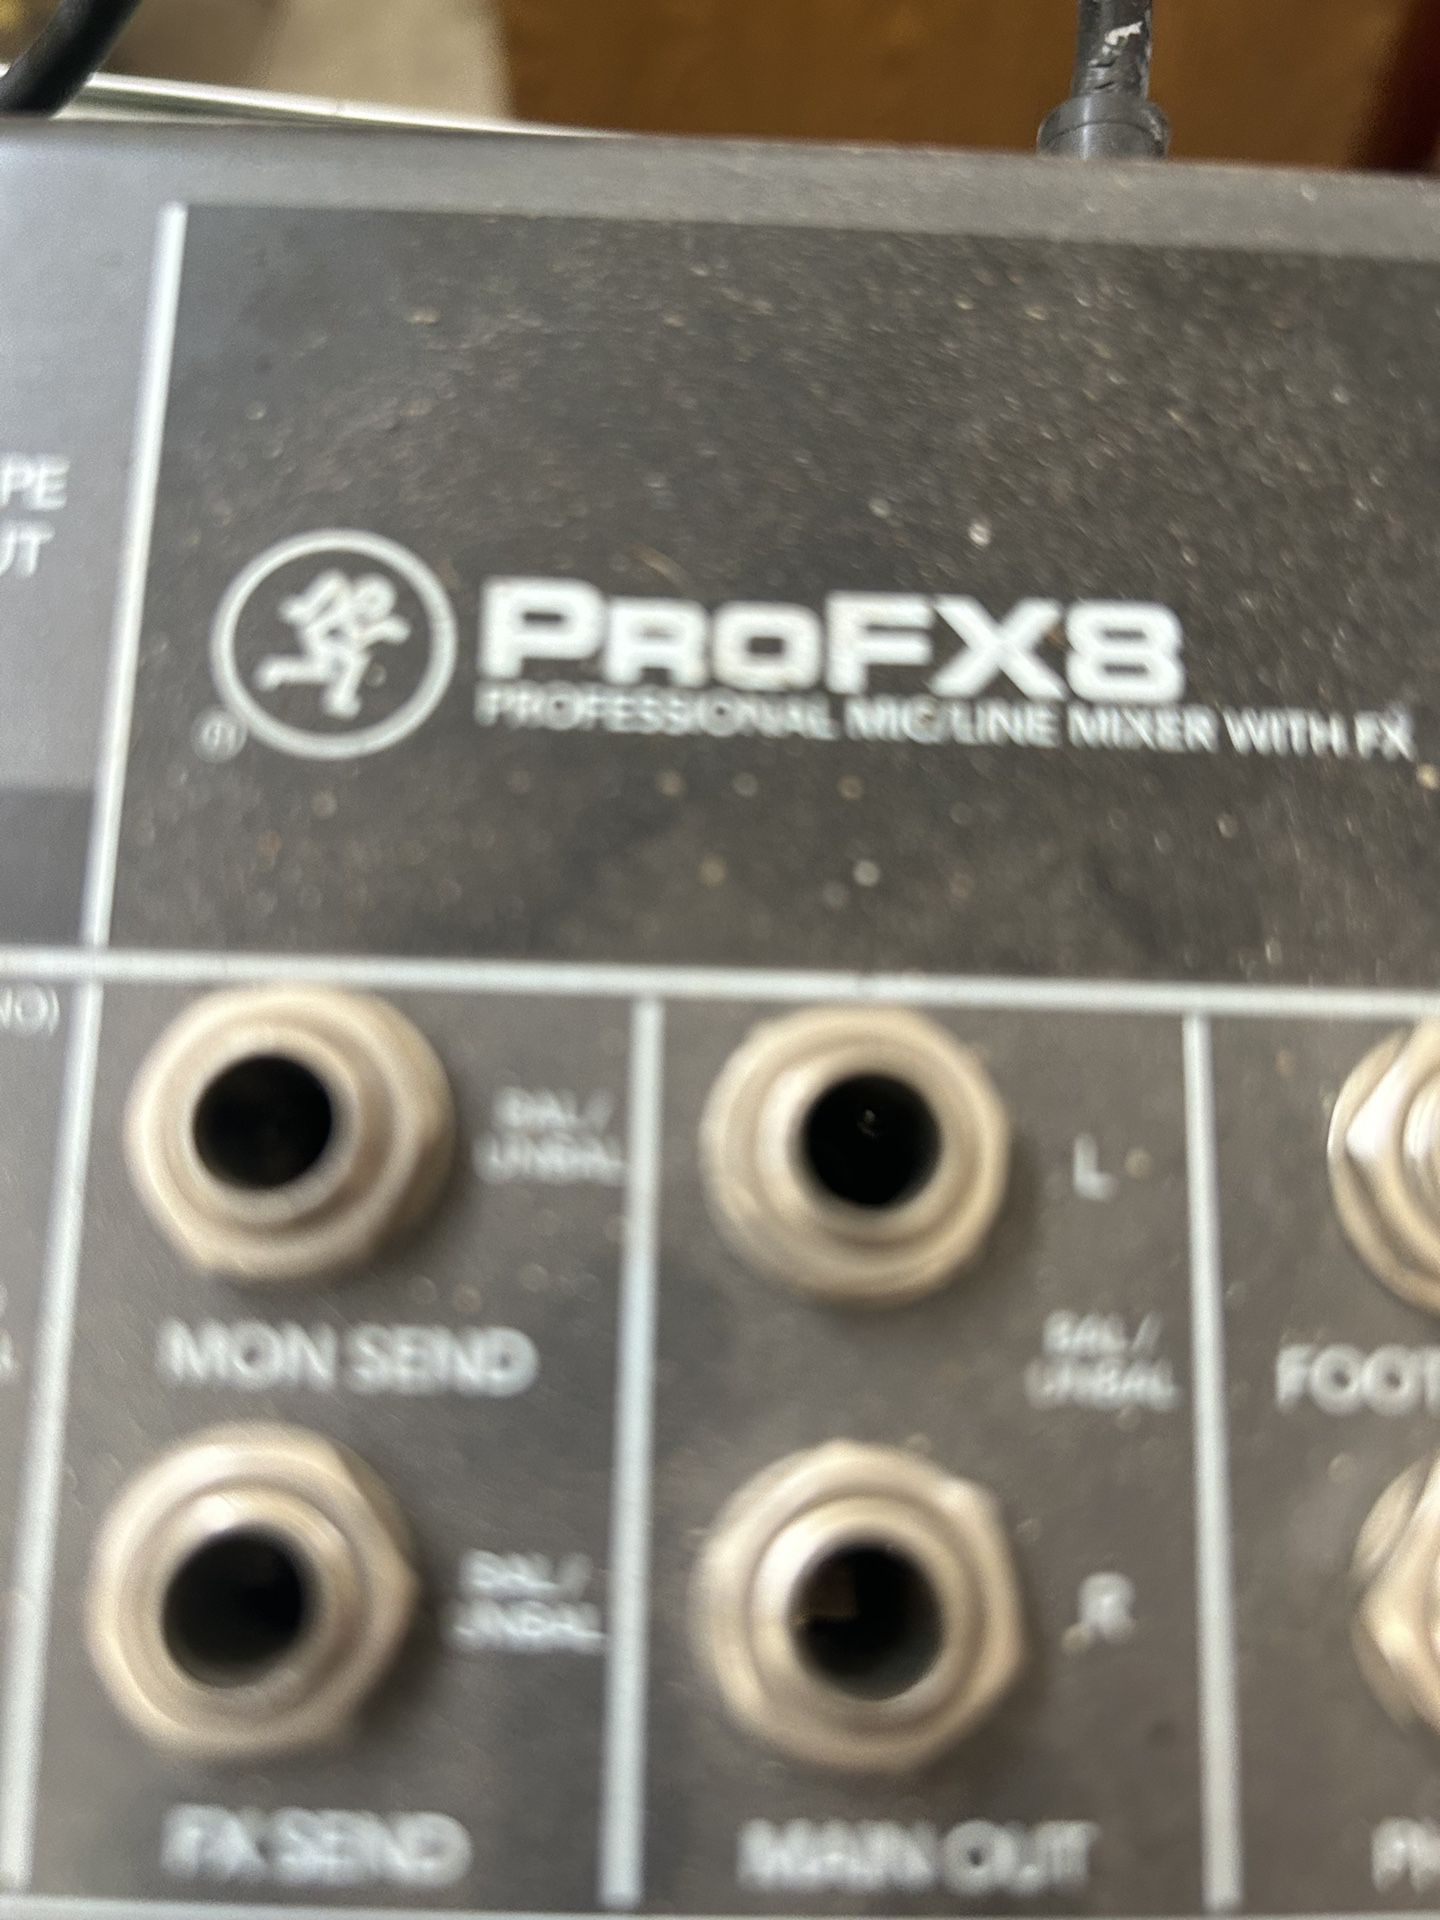 Mackie Profx8 Compact Mixer